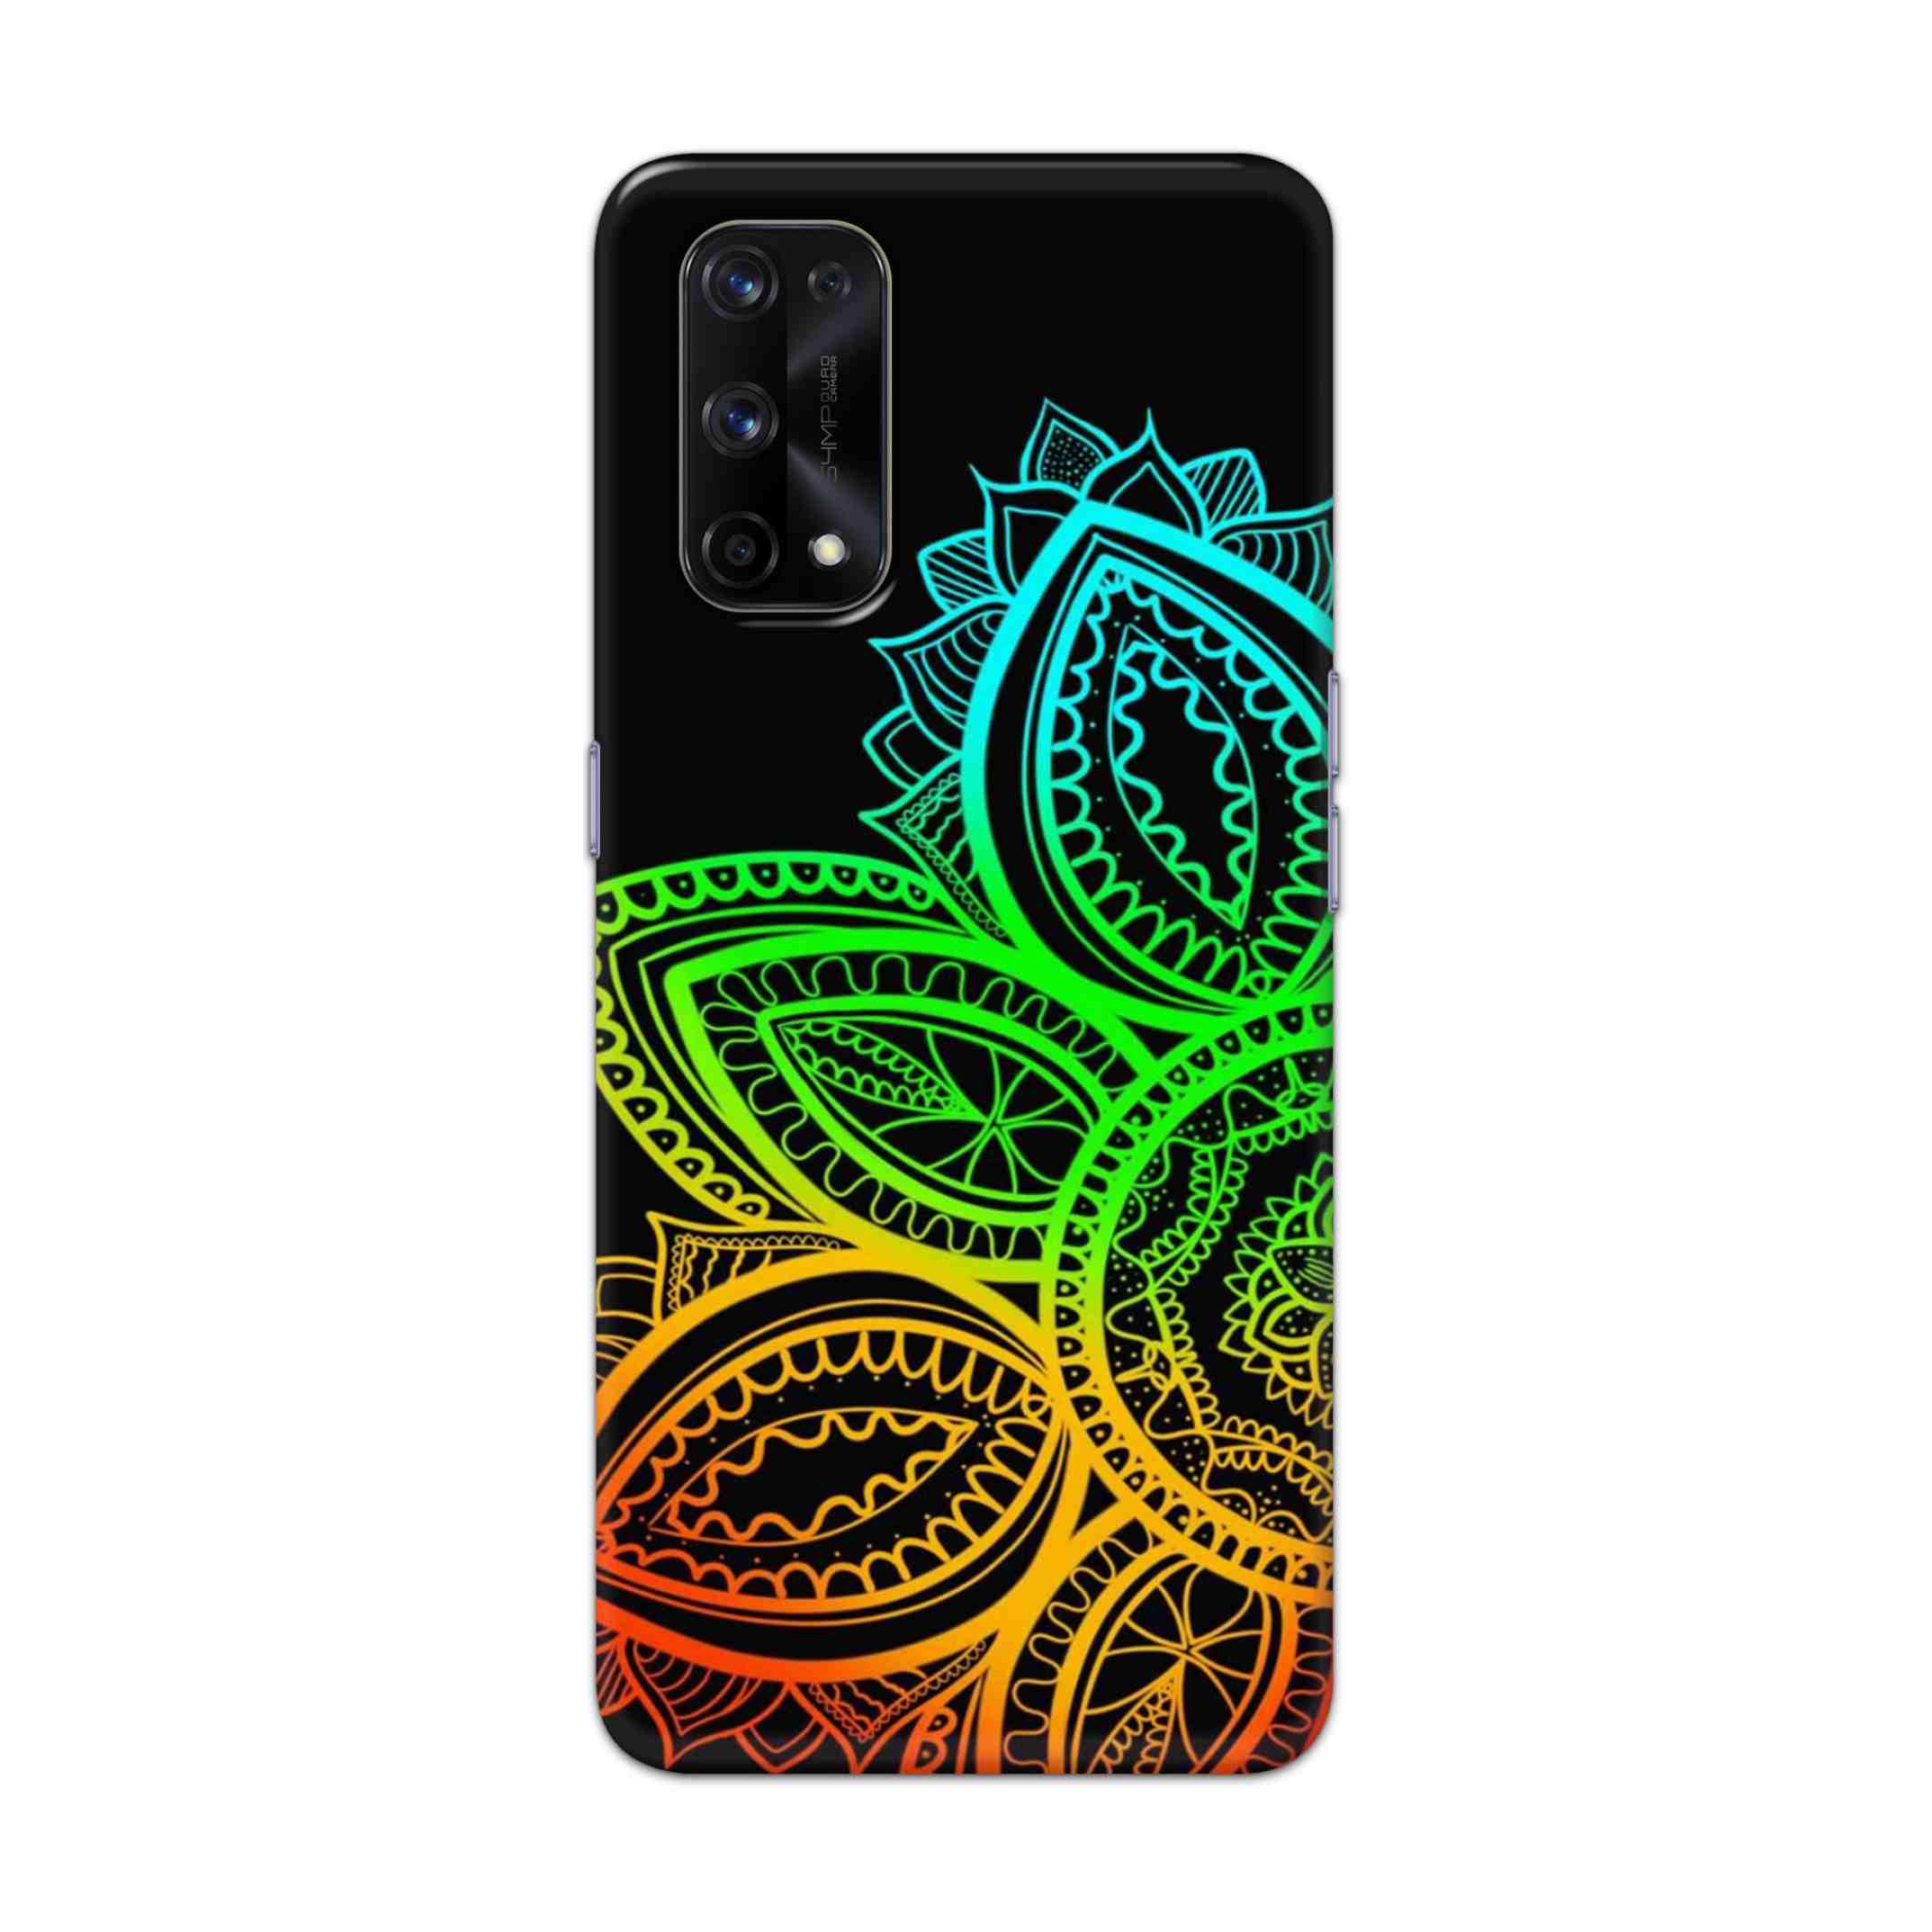 Buy Neon Mandala Hard Back Mobile Phone Case Cover For Realme X7 Pro Online